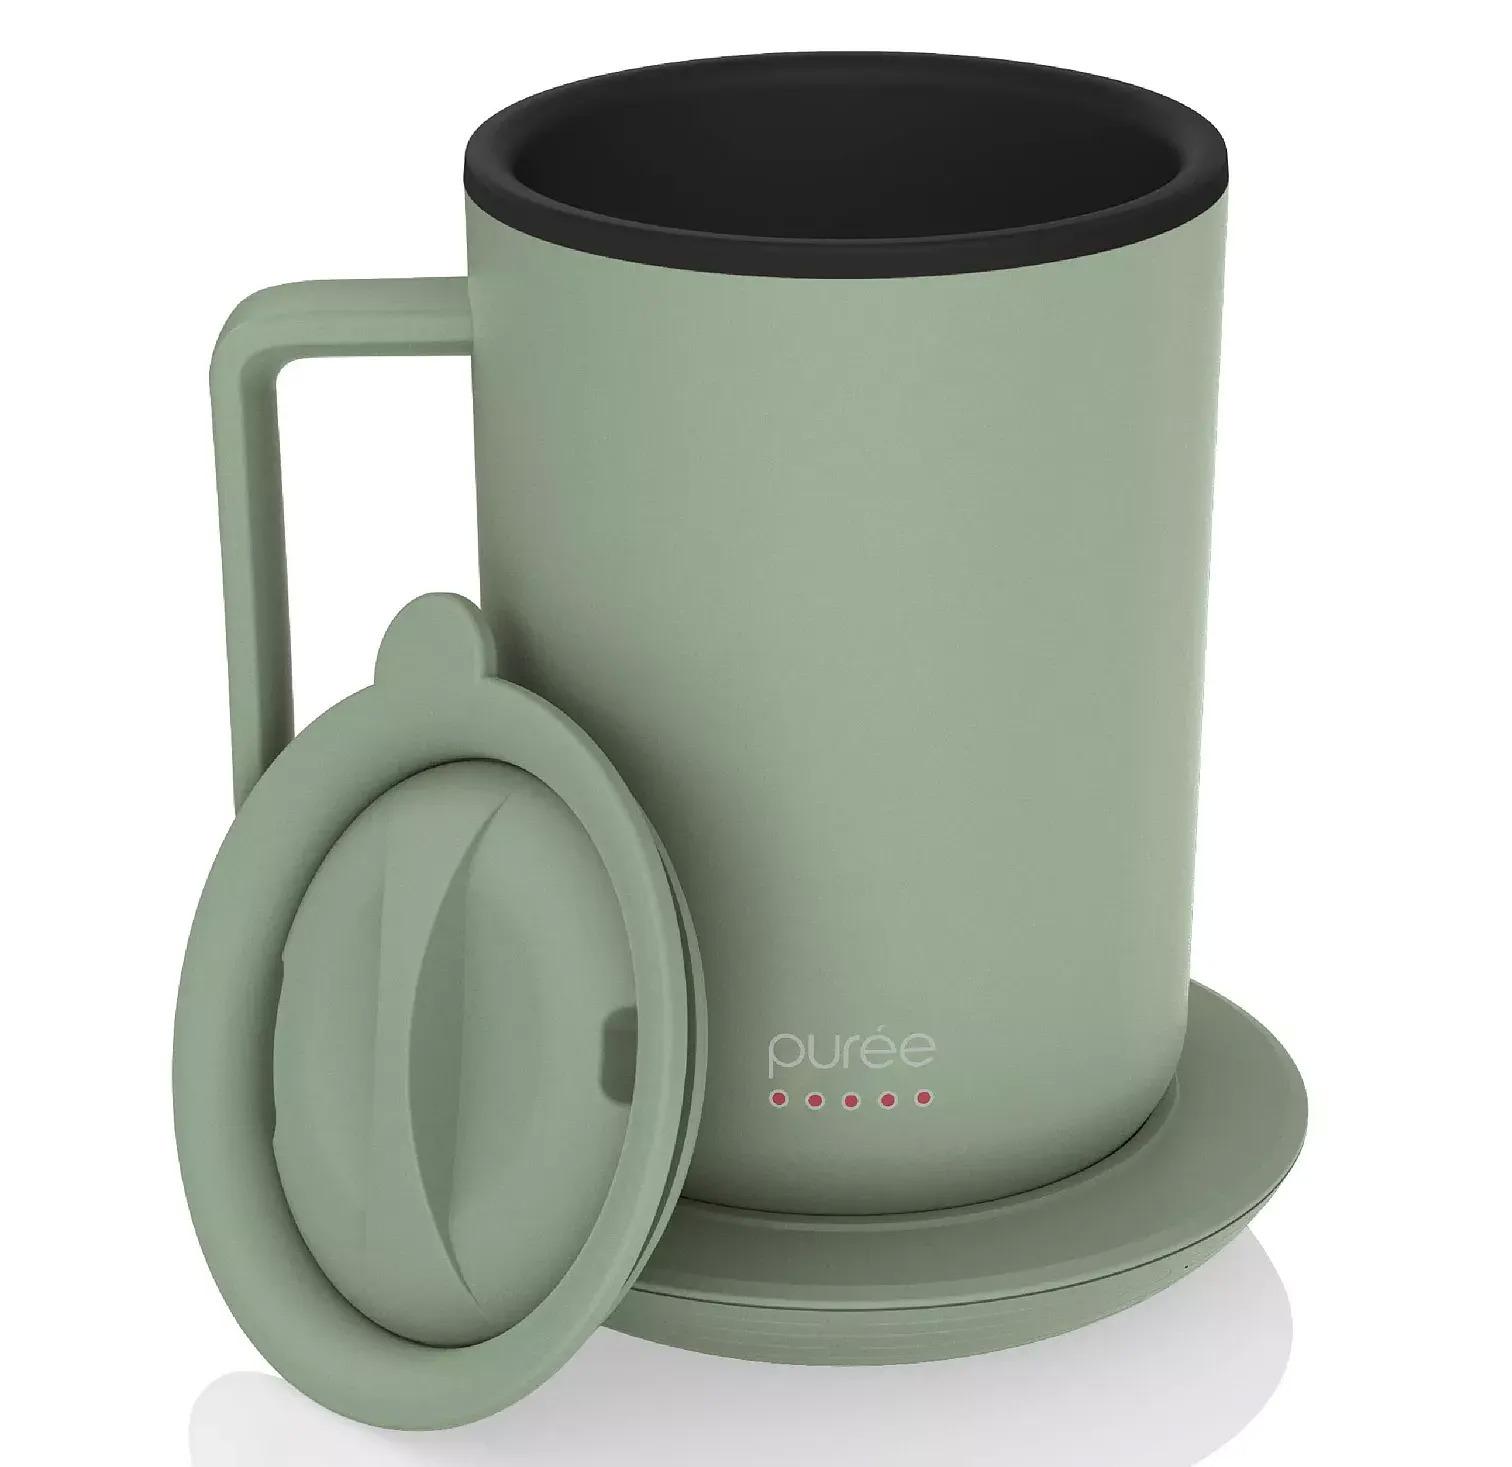 Tzumi Puree Warming Coffee Mug for $35.99 Shipped